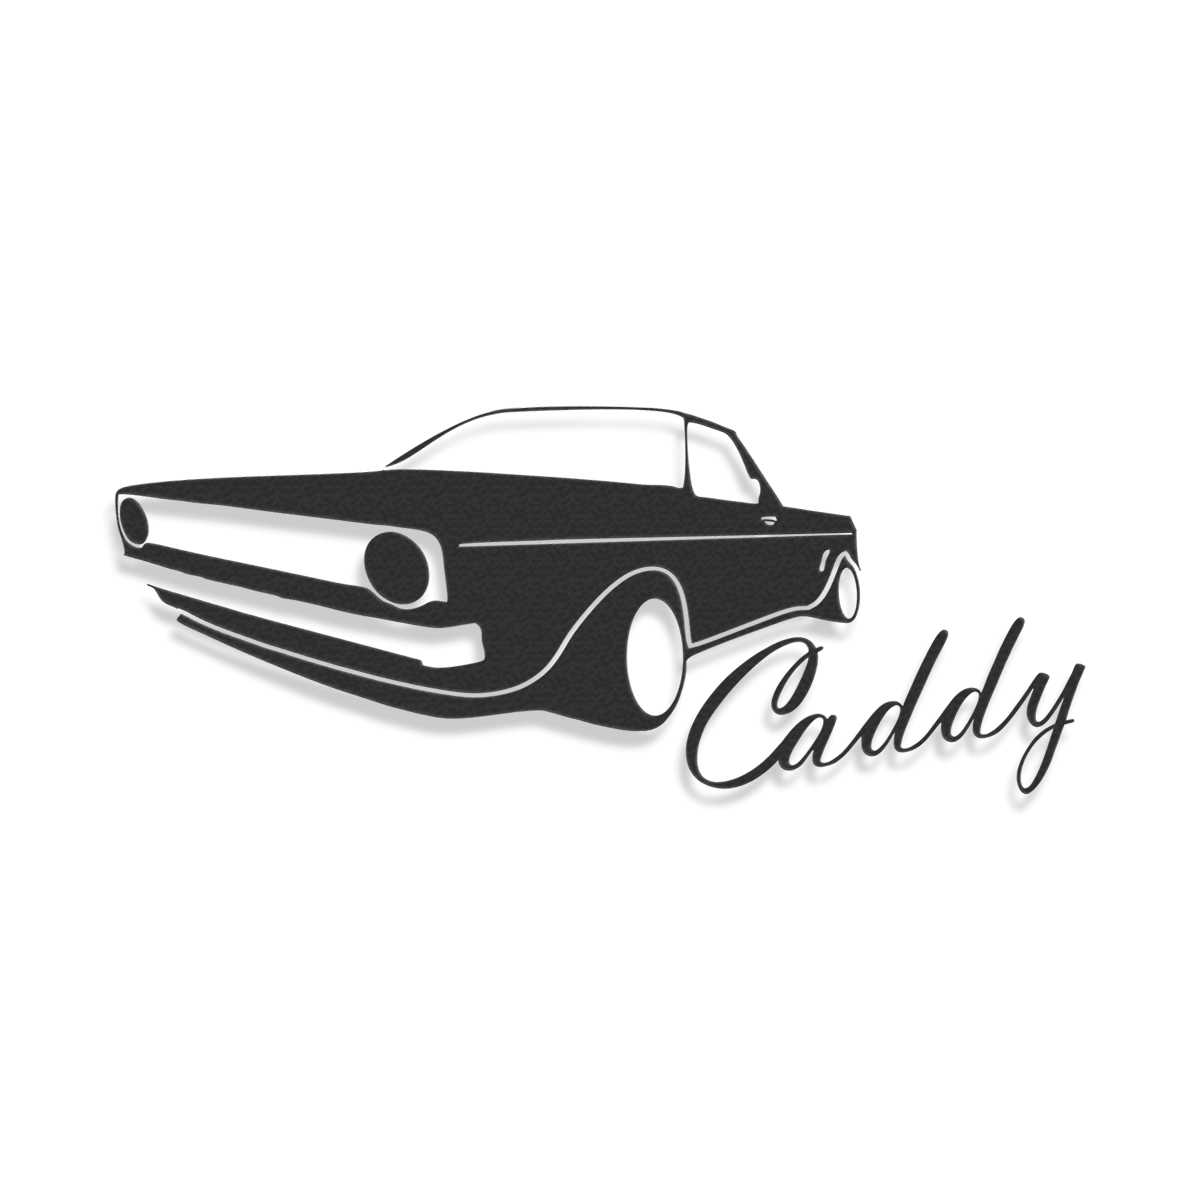 Black VW Caddy isolated on white – Stock Editorial Photo © Pixellio  #94606918